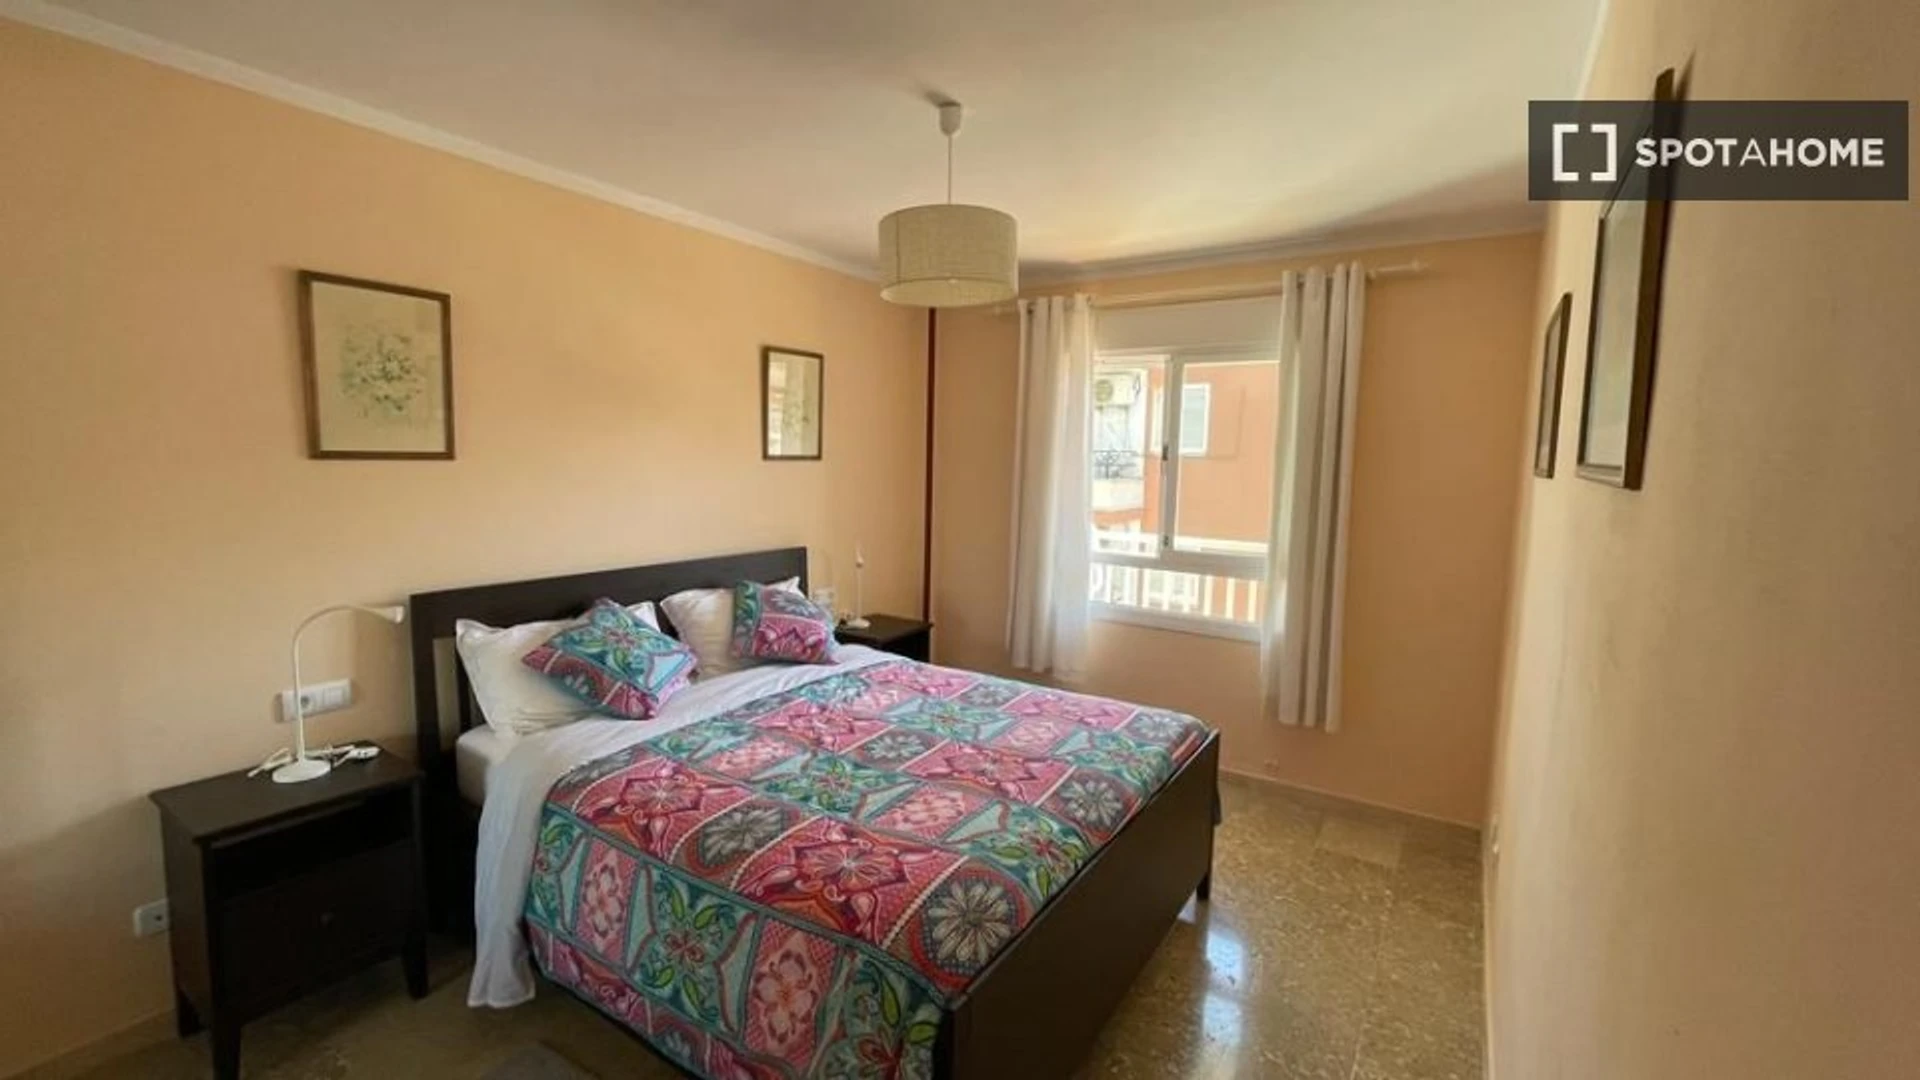 Location mensuelle de chambres à Palma De Majorque